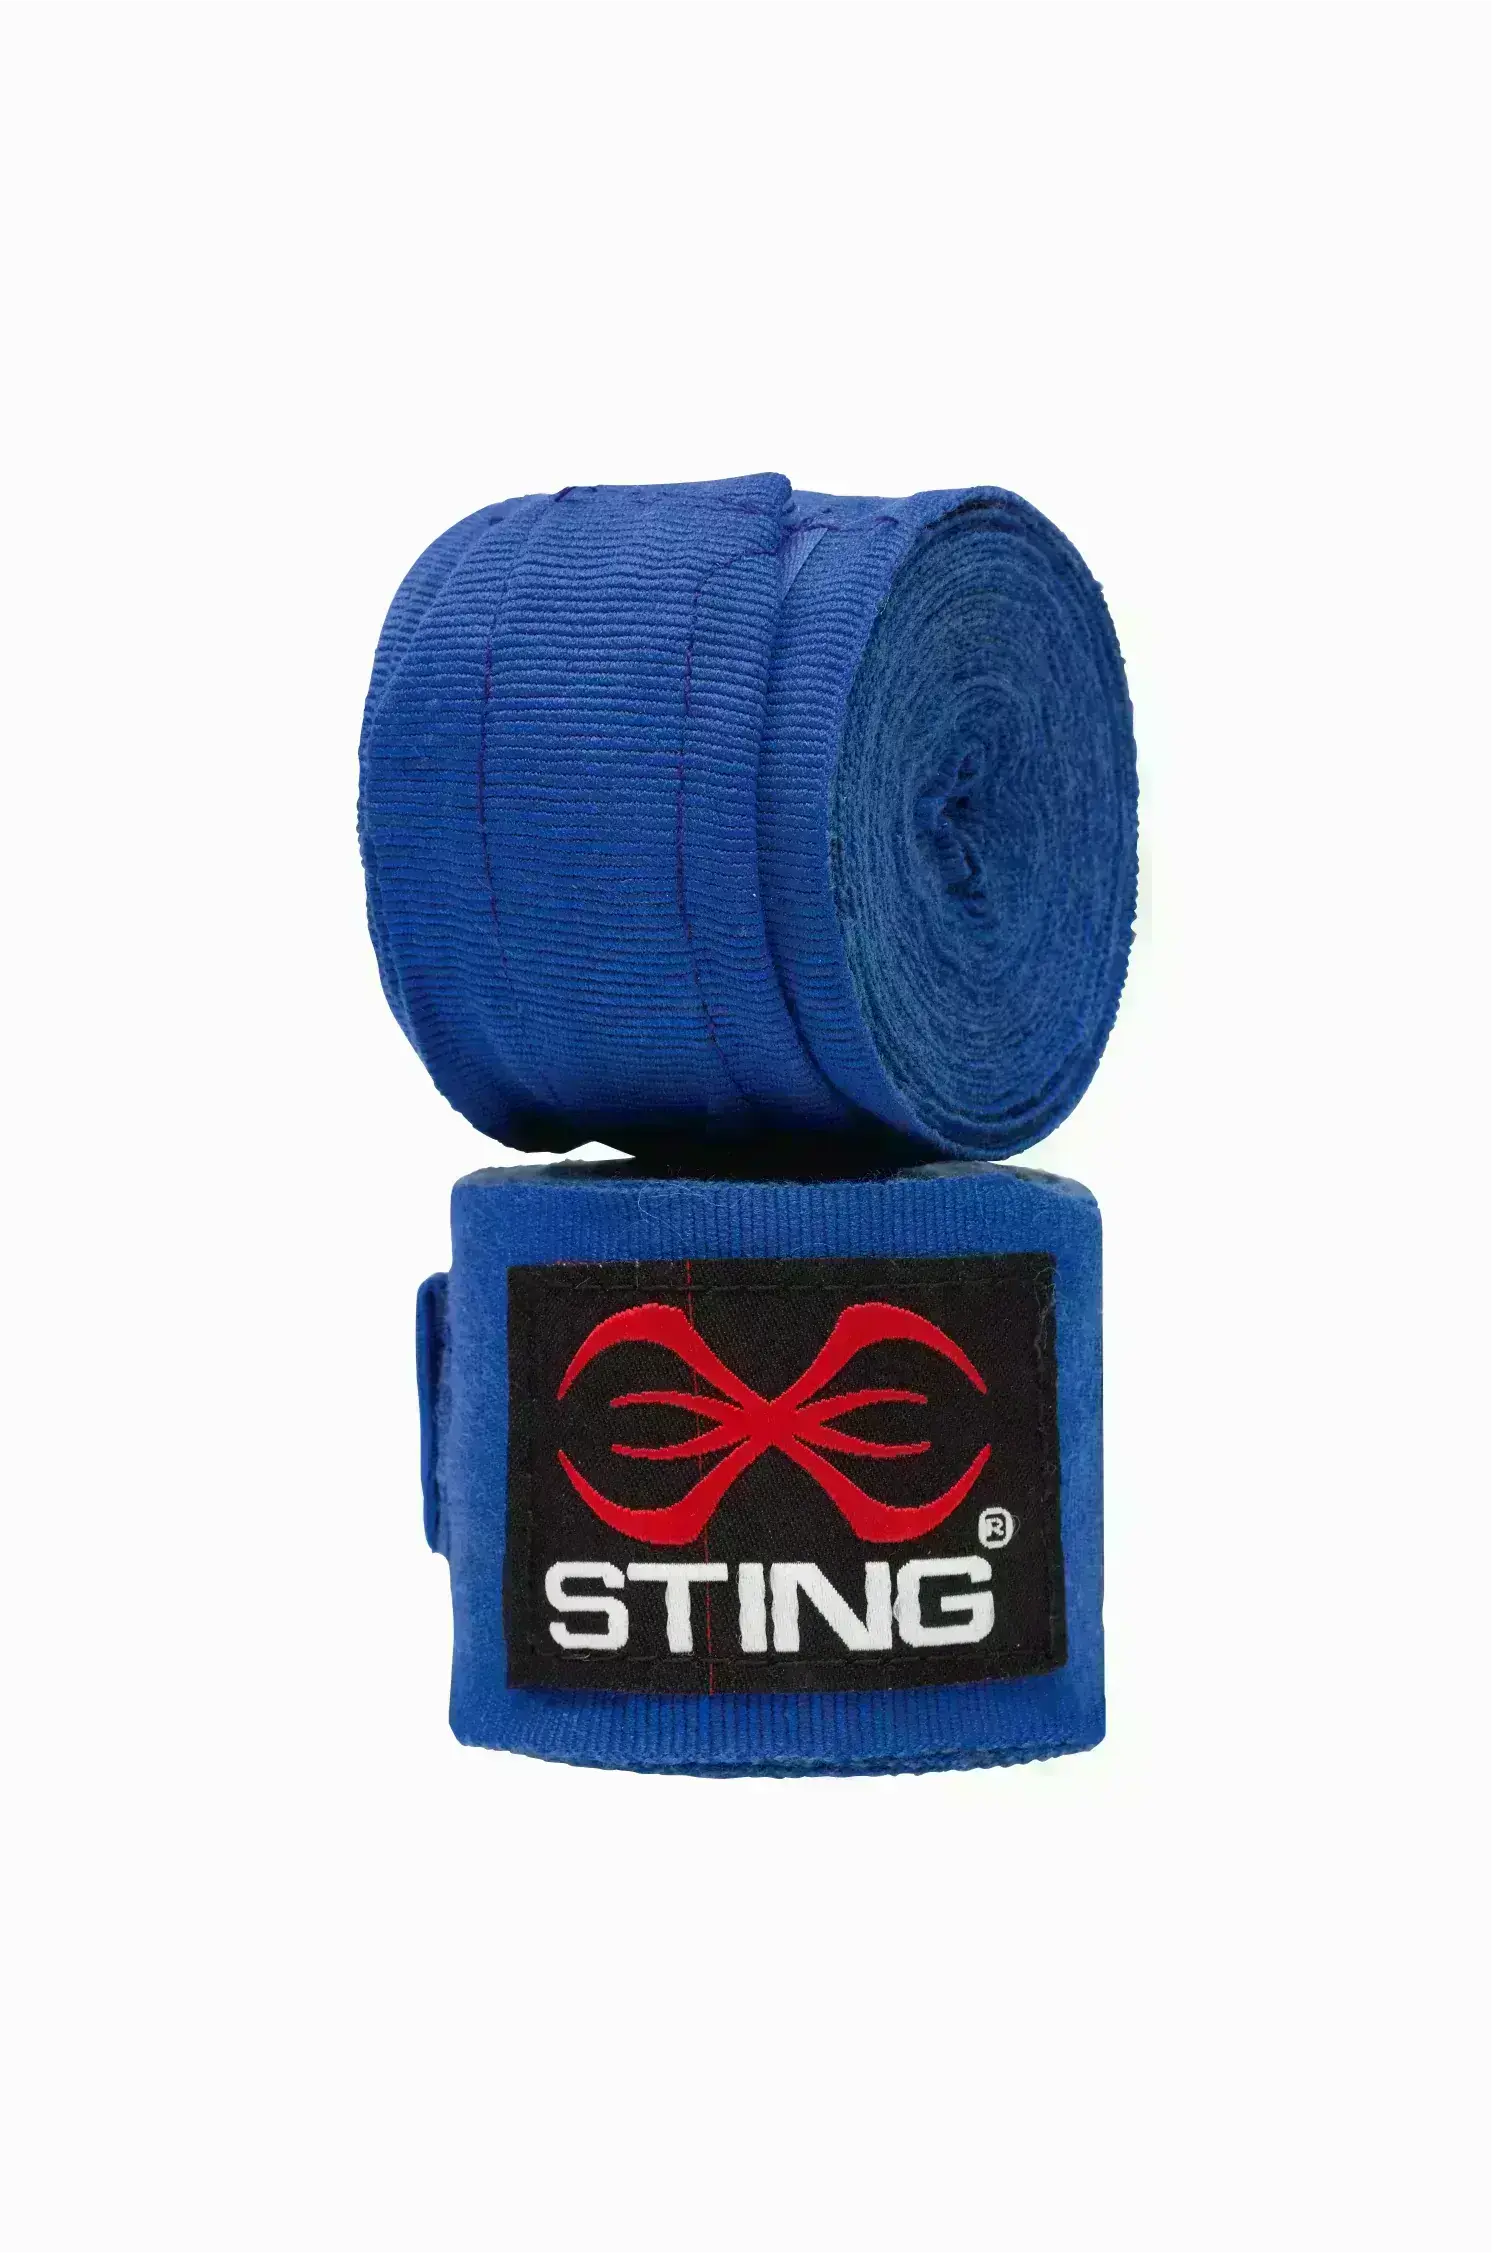 Sting Elasticicated Hand Wraps Blue-4.5m Fight Co